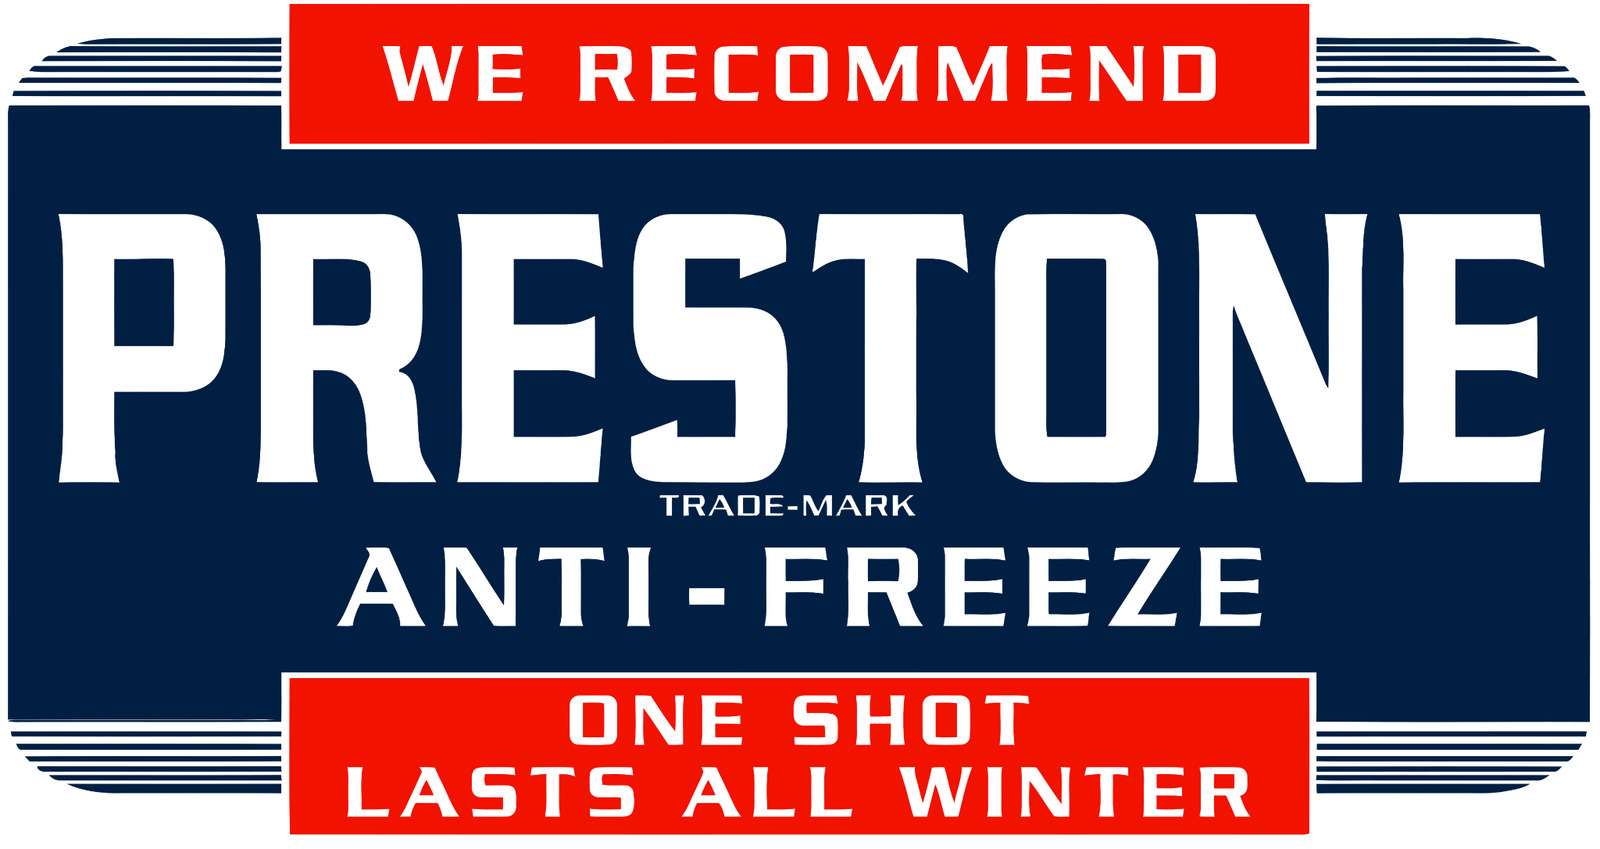 Prestone Anti-Freeze Oil Gas sticker Vinyl Decal |10 Sizes with TRACKING